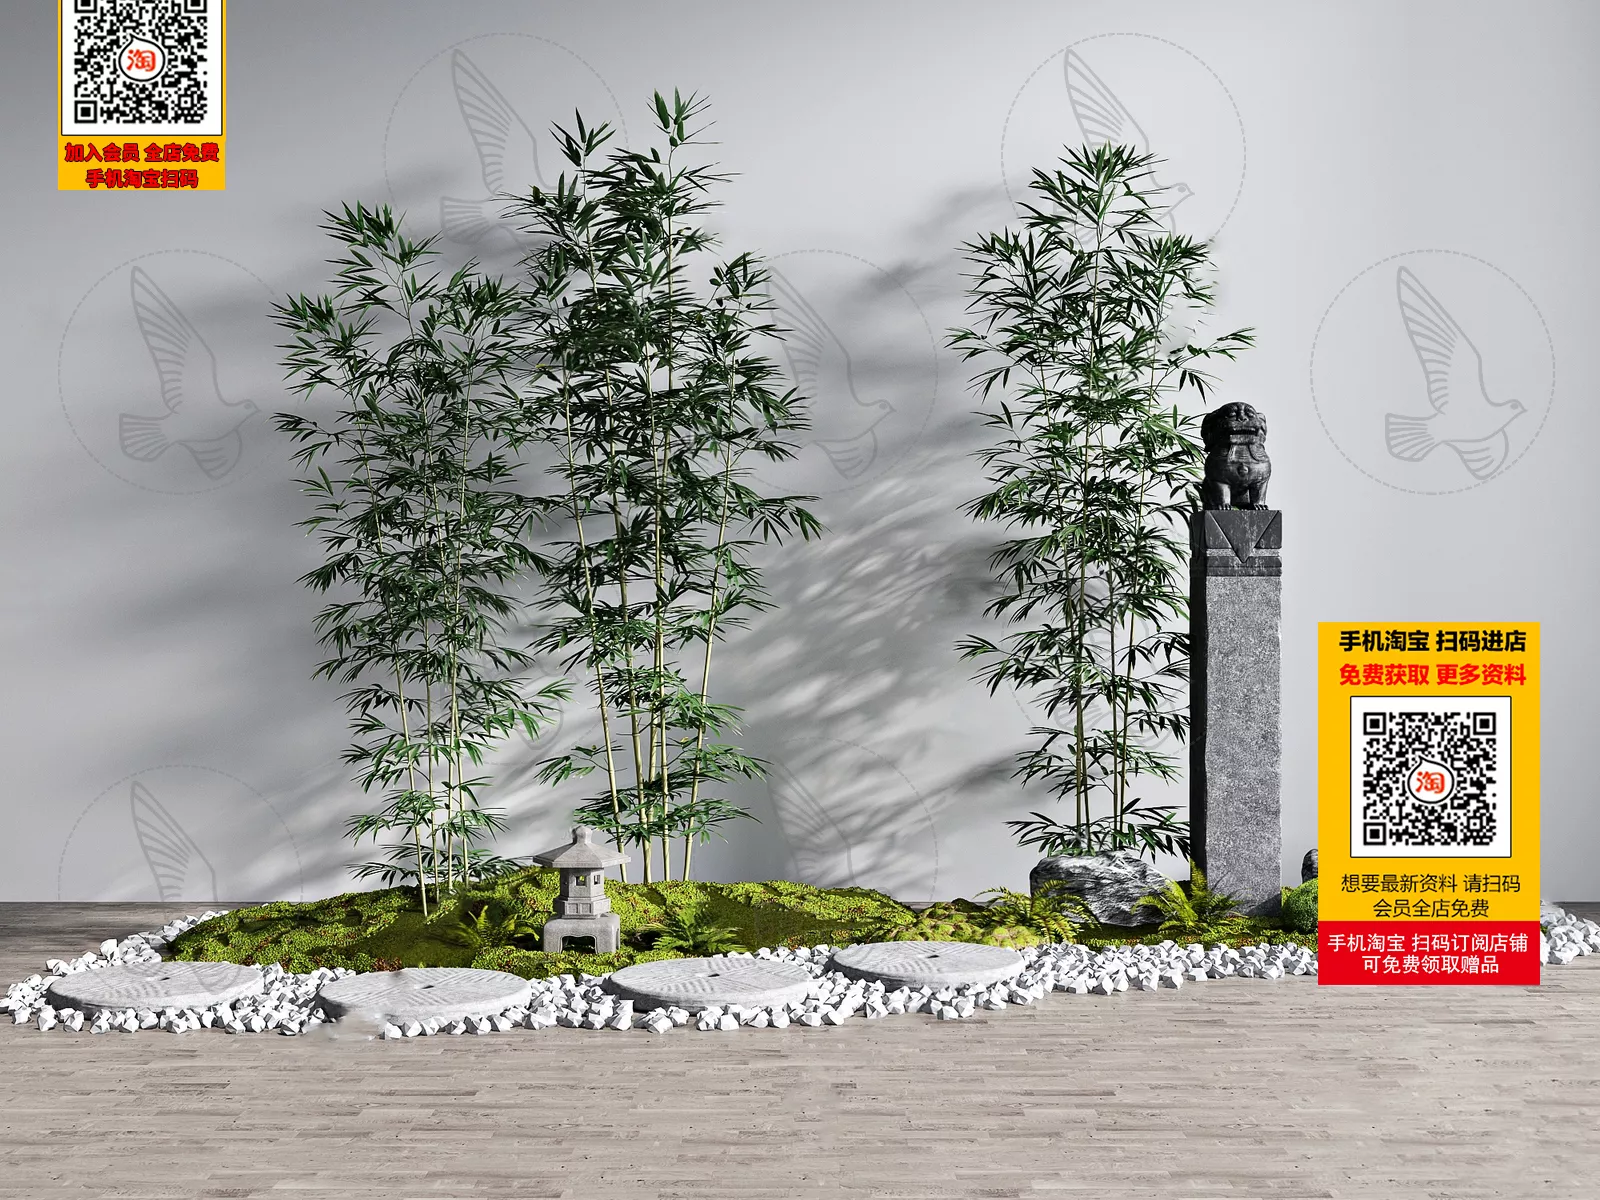 MODERN PLANTS - SKETCHUP 3D MODEL - VRAY OR ENSCAPE - ID12098